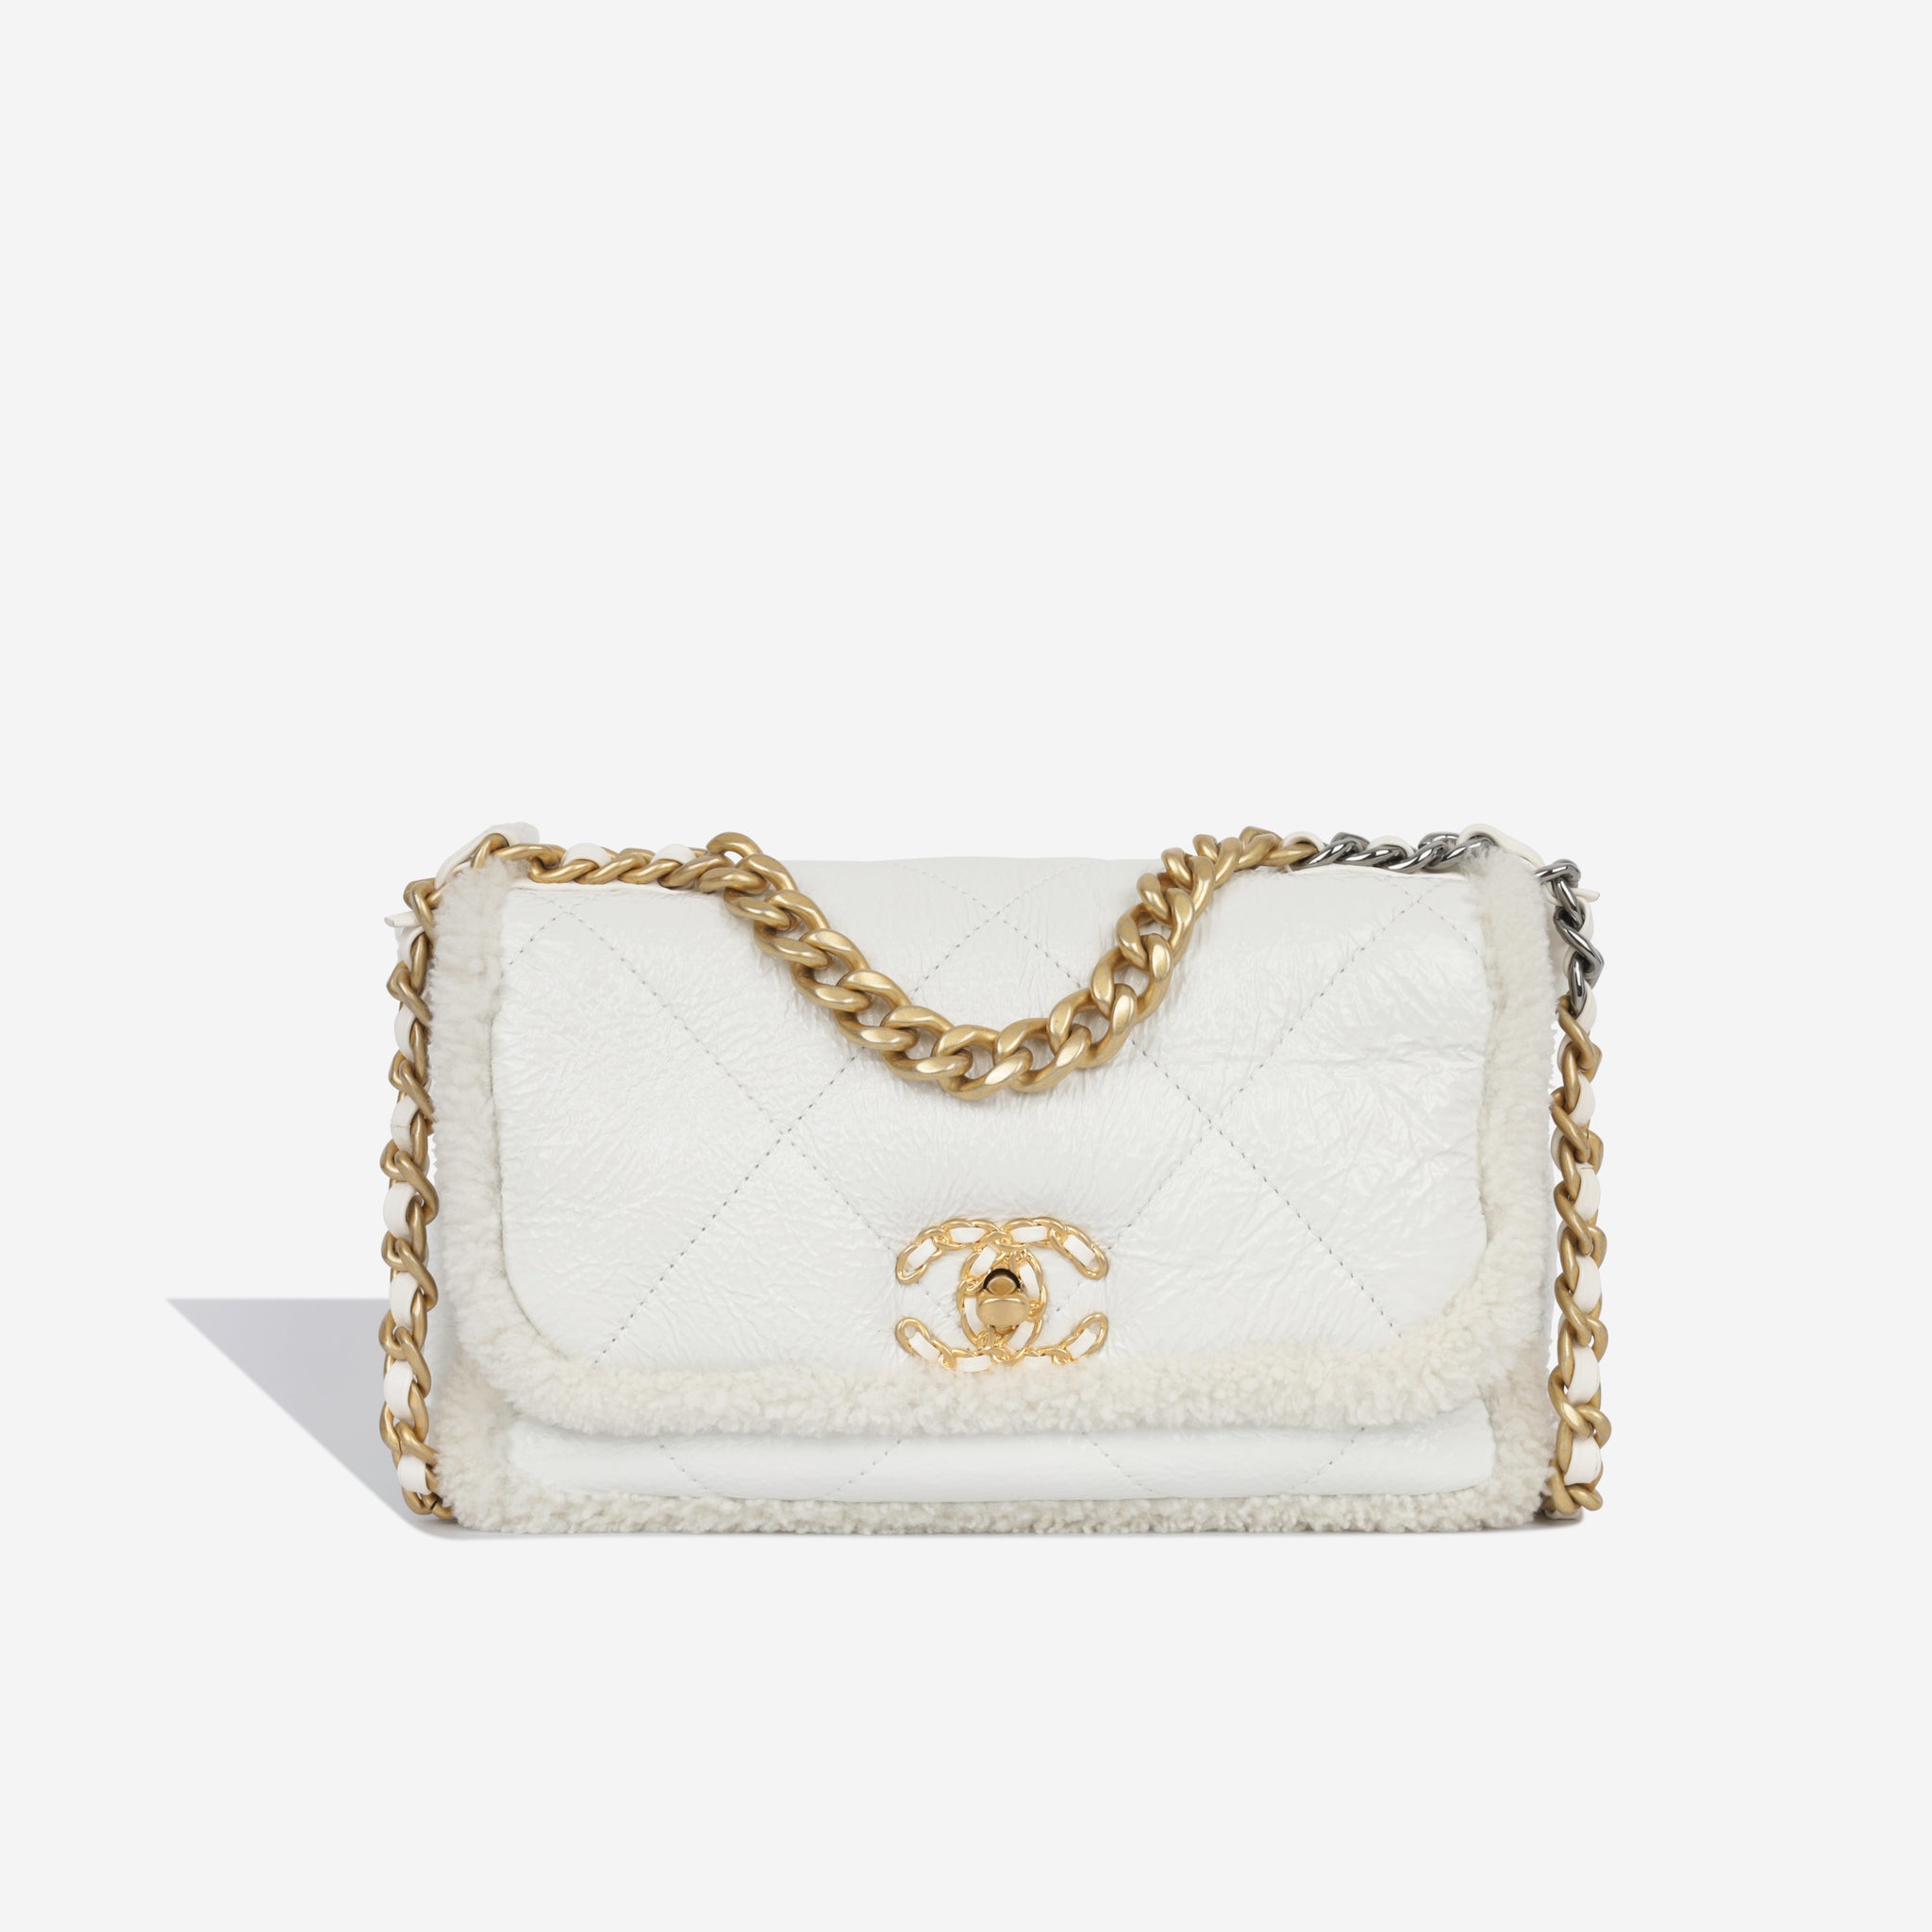 Chanel  Chanel 19 Flap Bag  White Calfskin Lambskin  MHW  Immaculate   Bagista